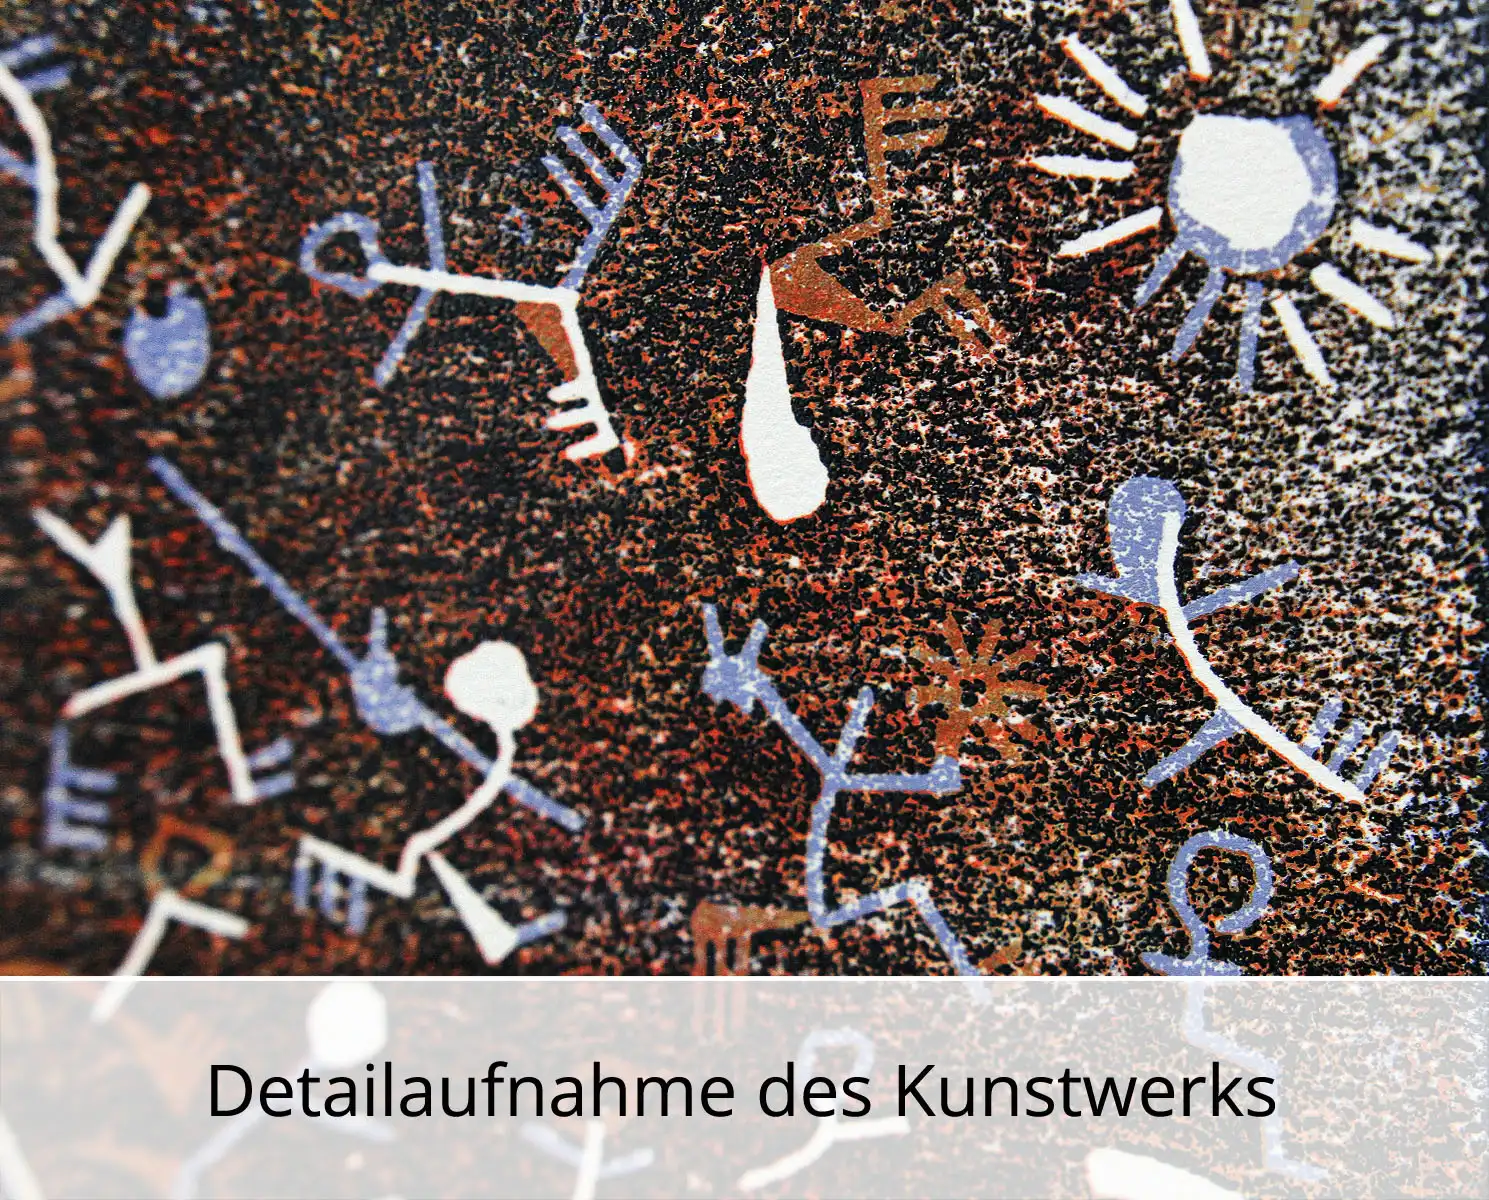 F.O. Haake: "Der Hahn - Blatt S3", originale Grafik/serielles Unikat, mehrfarbiger Linoldruck